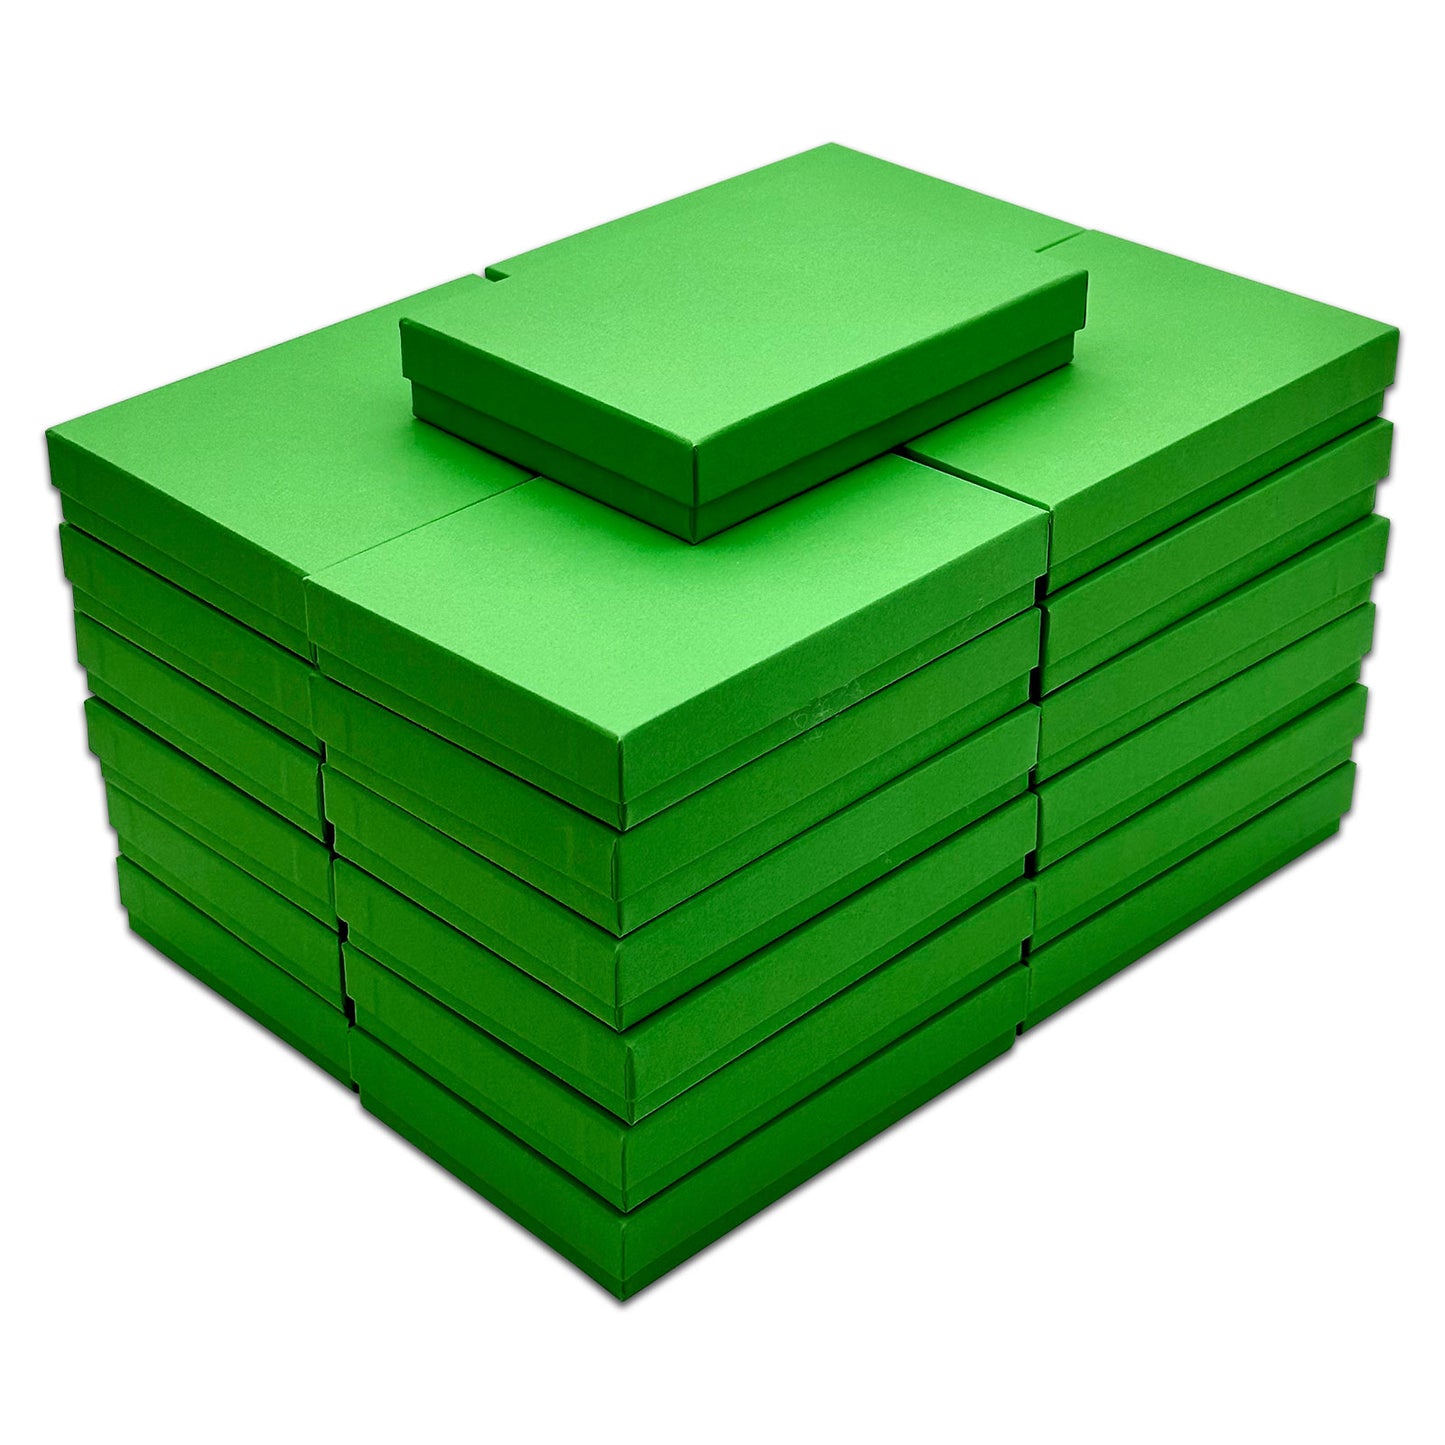 5 7/16" x 3 15/16" x 1" Light Green Cotton Filled Paper Box